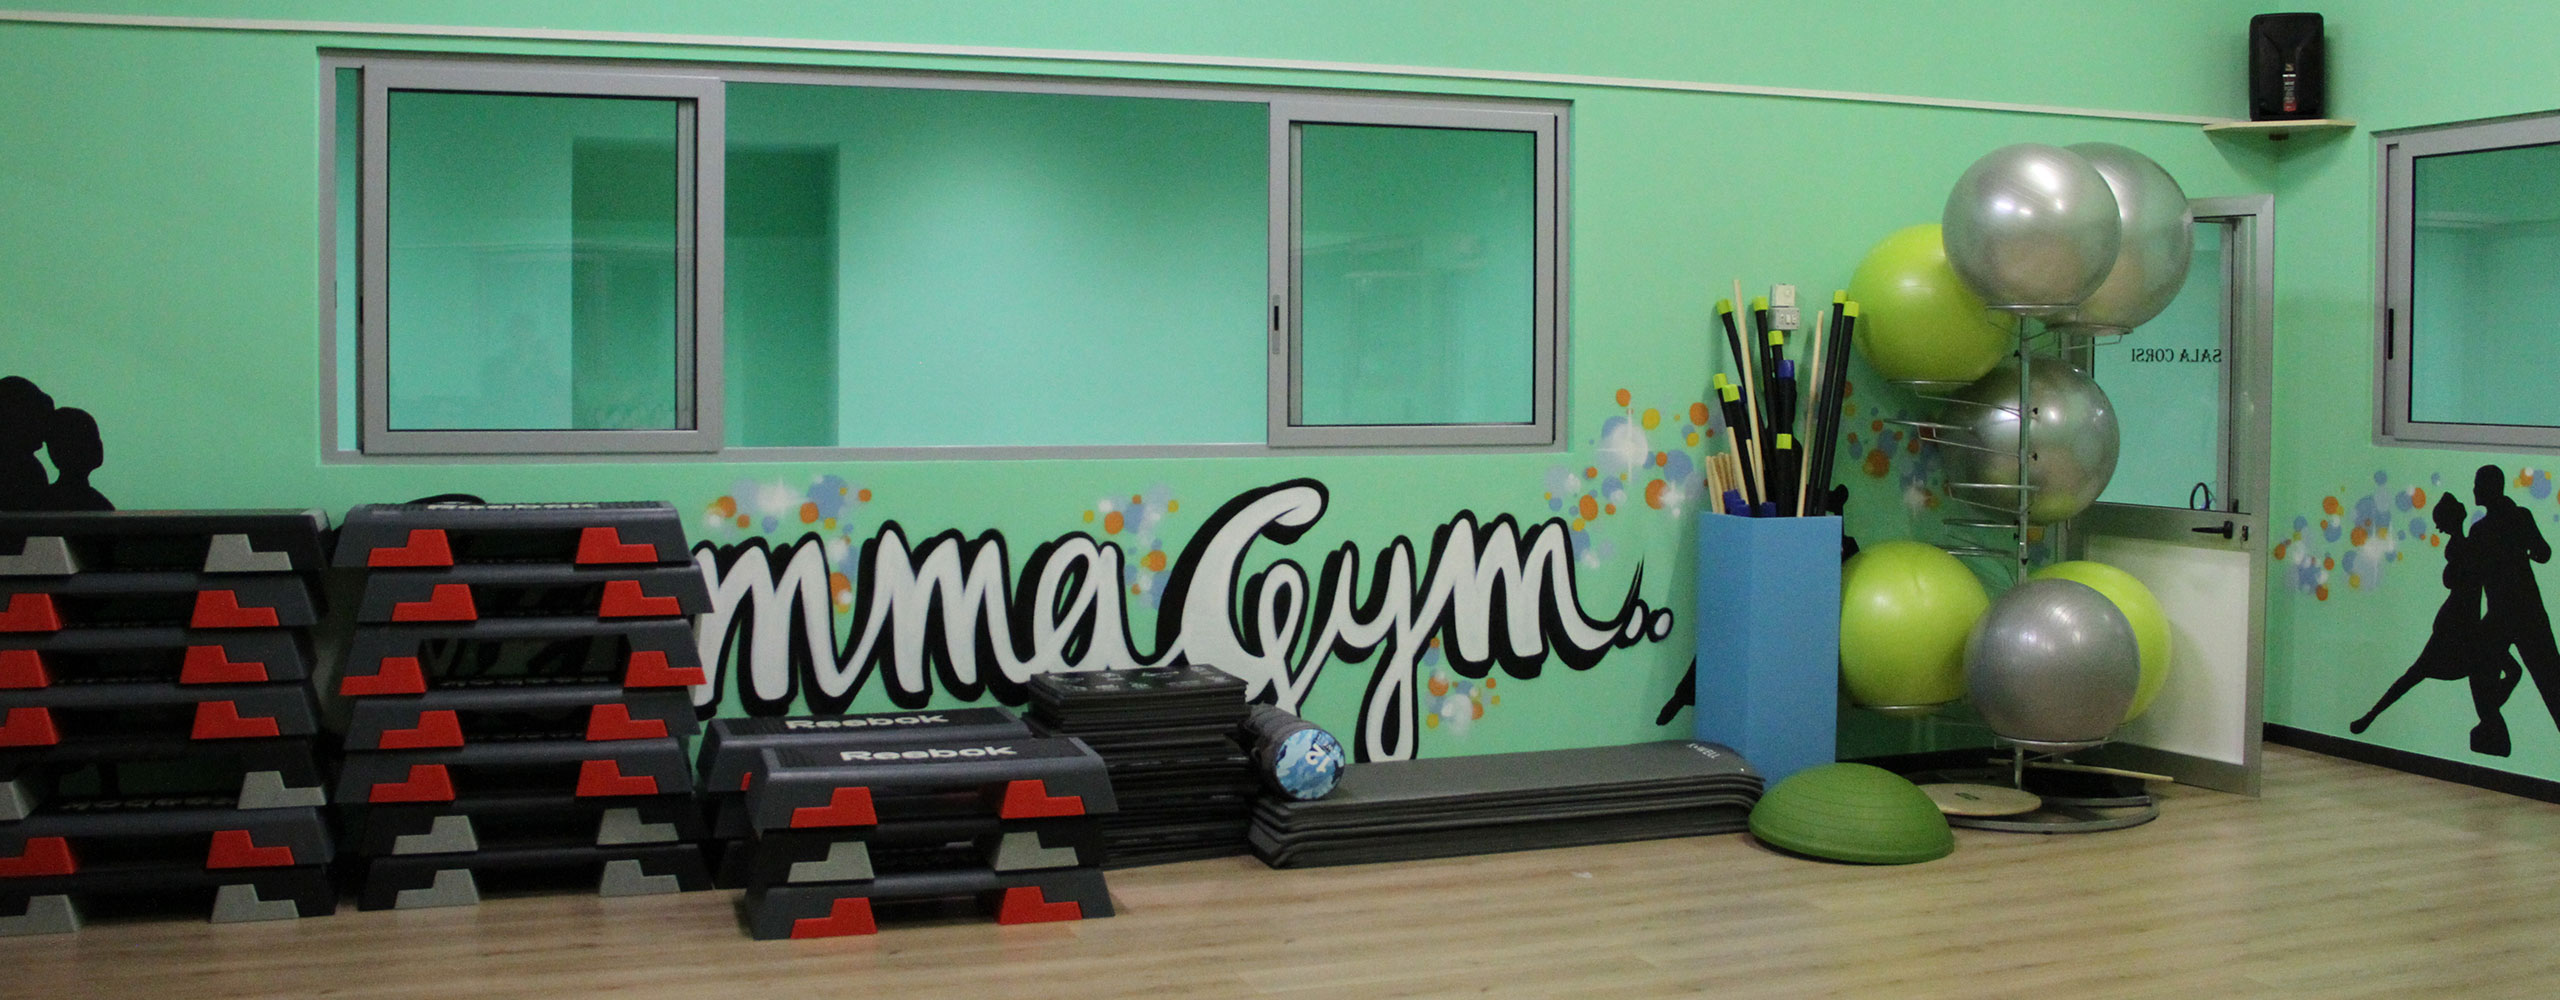 Gamma Gym slide